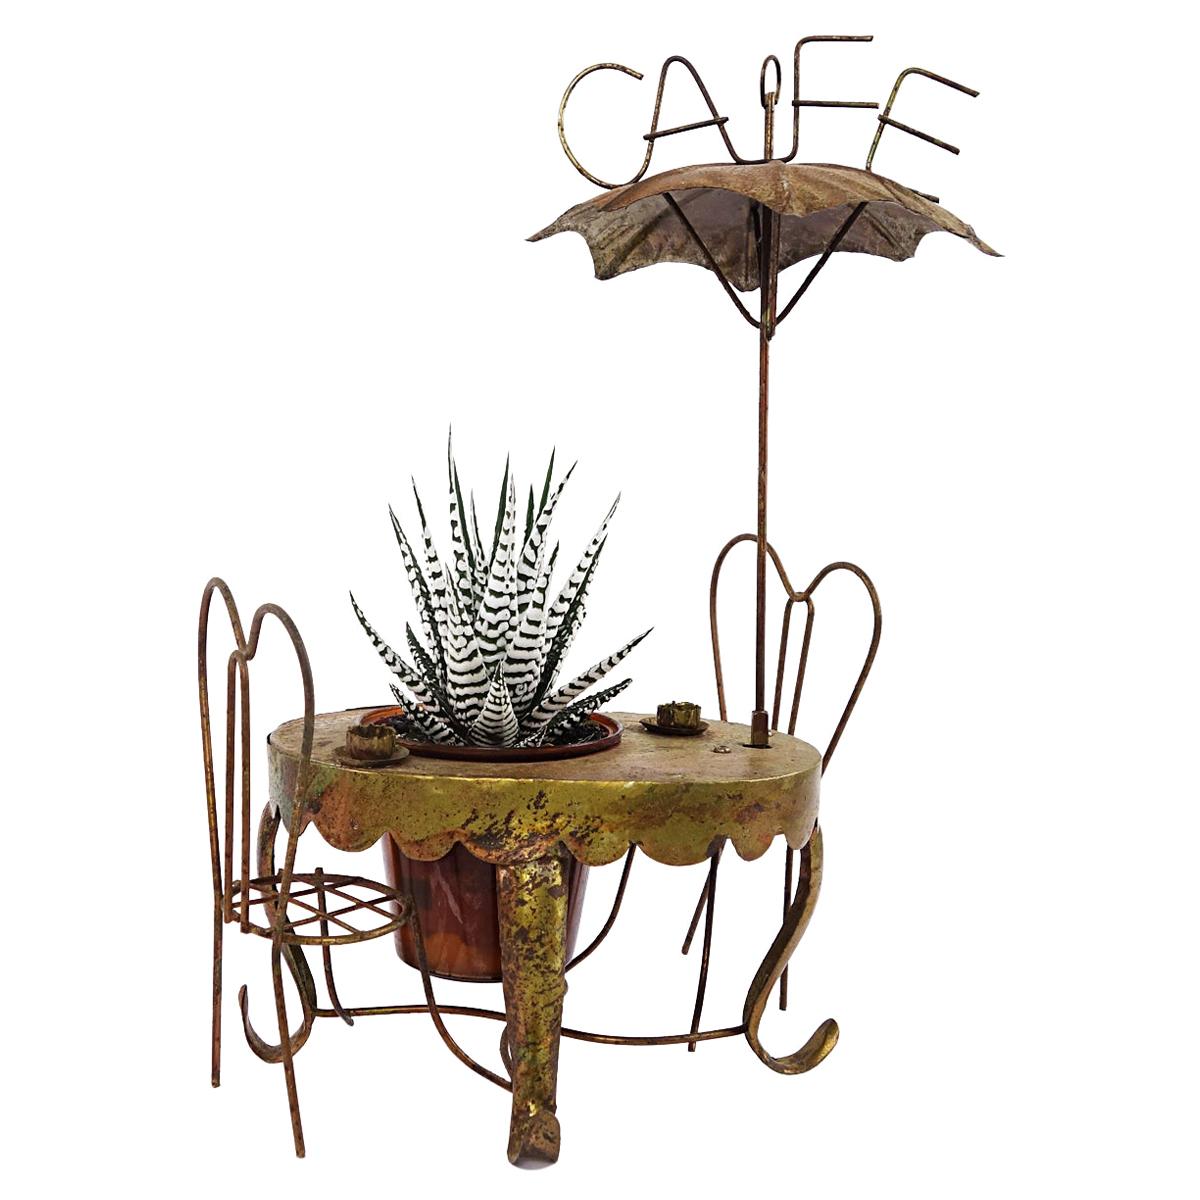 Decorative Brass Miniature of a Parisian Sidewalk Café Table, Chair and Parasol